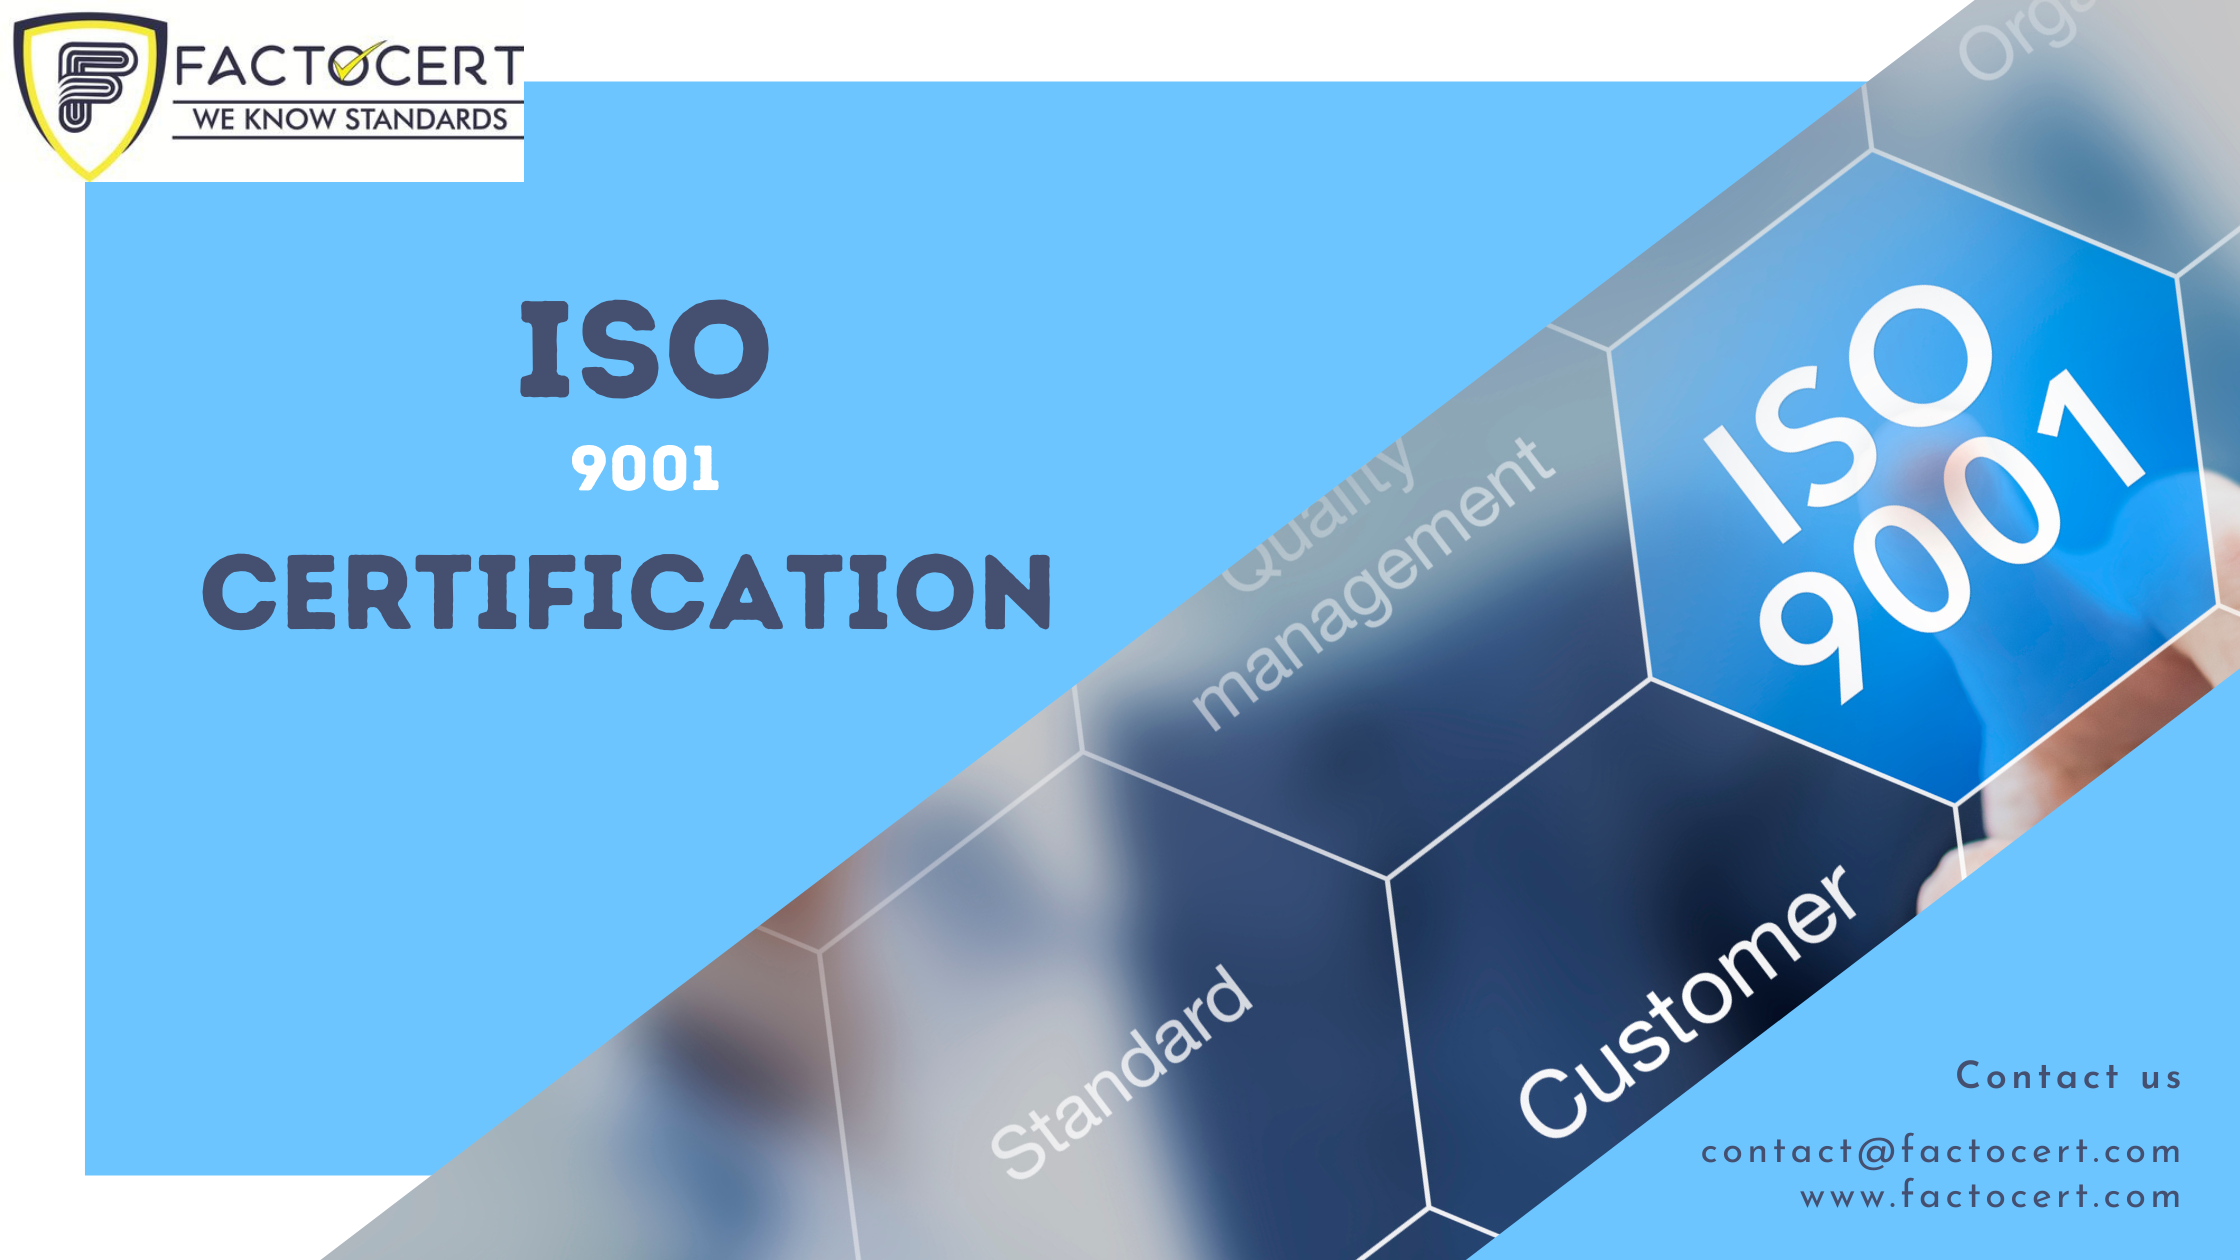 iso 9001 certification in kenya